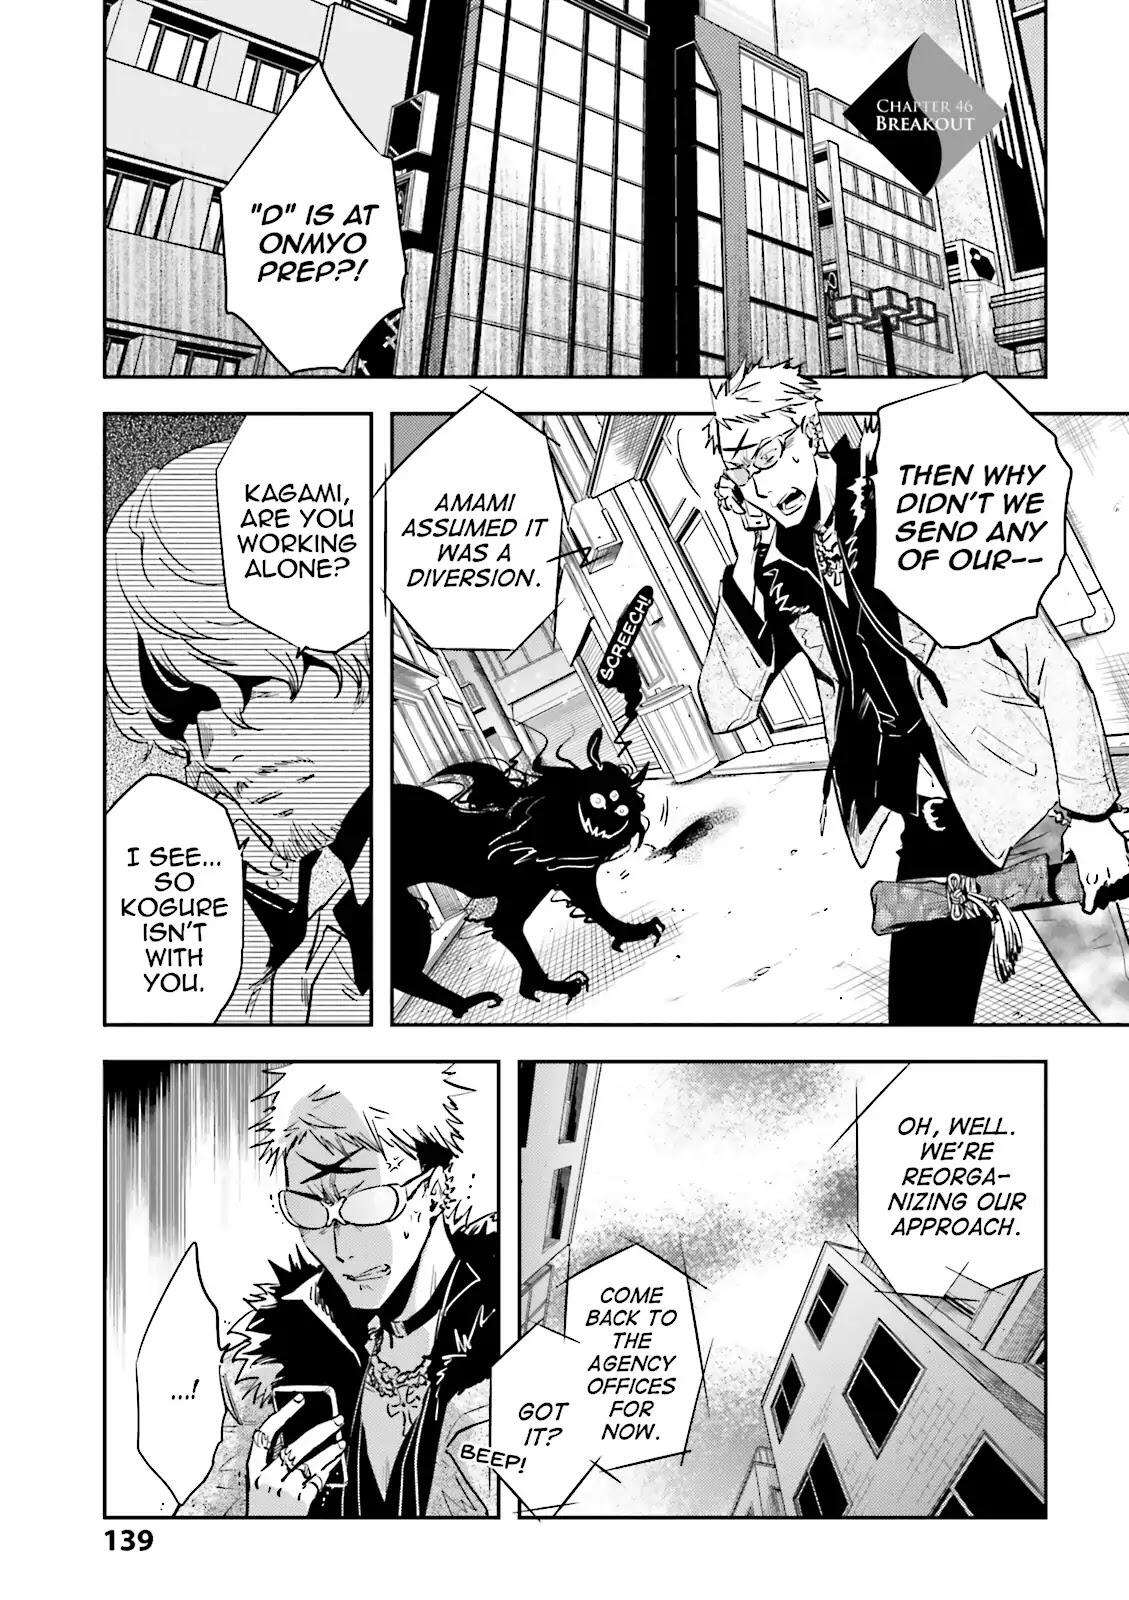 Read Tokyo Ravens Chapter 57: Guard on Mangakakalot